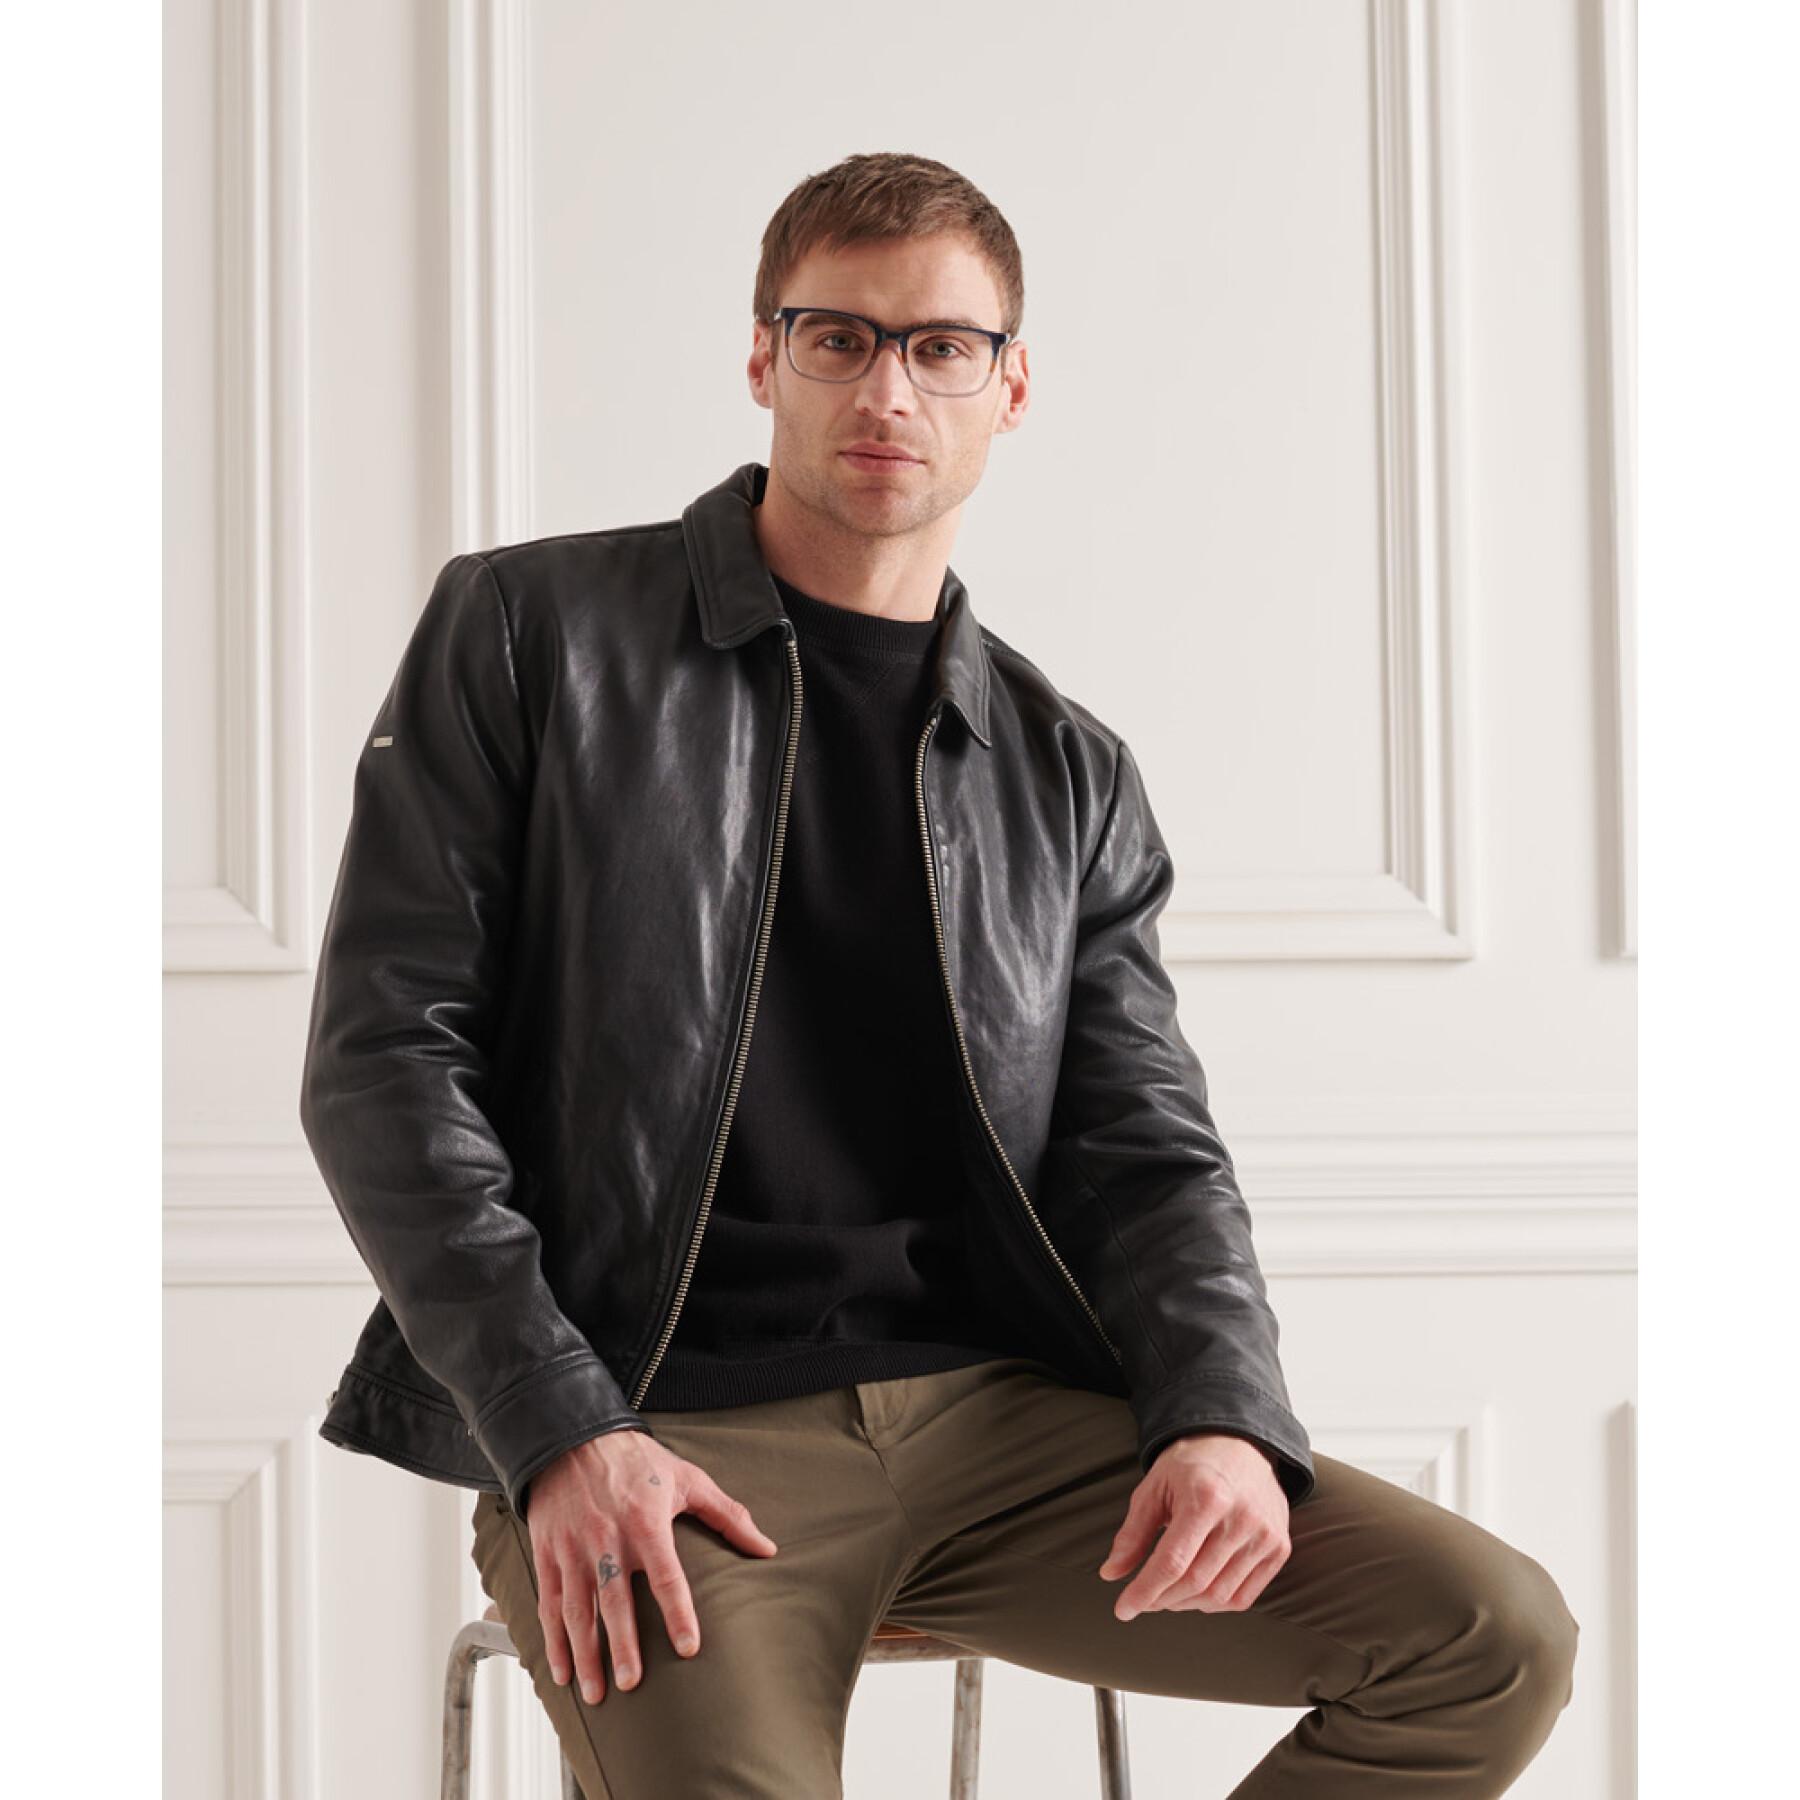 Leather jacket Superdry Indie Coach